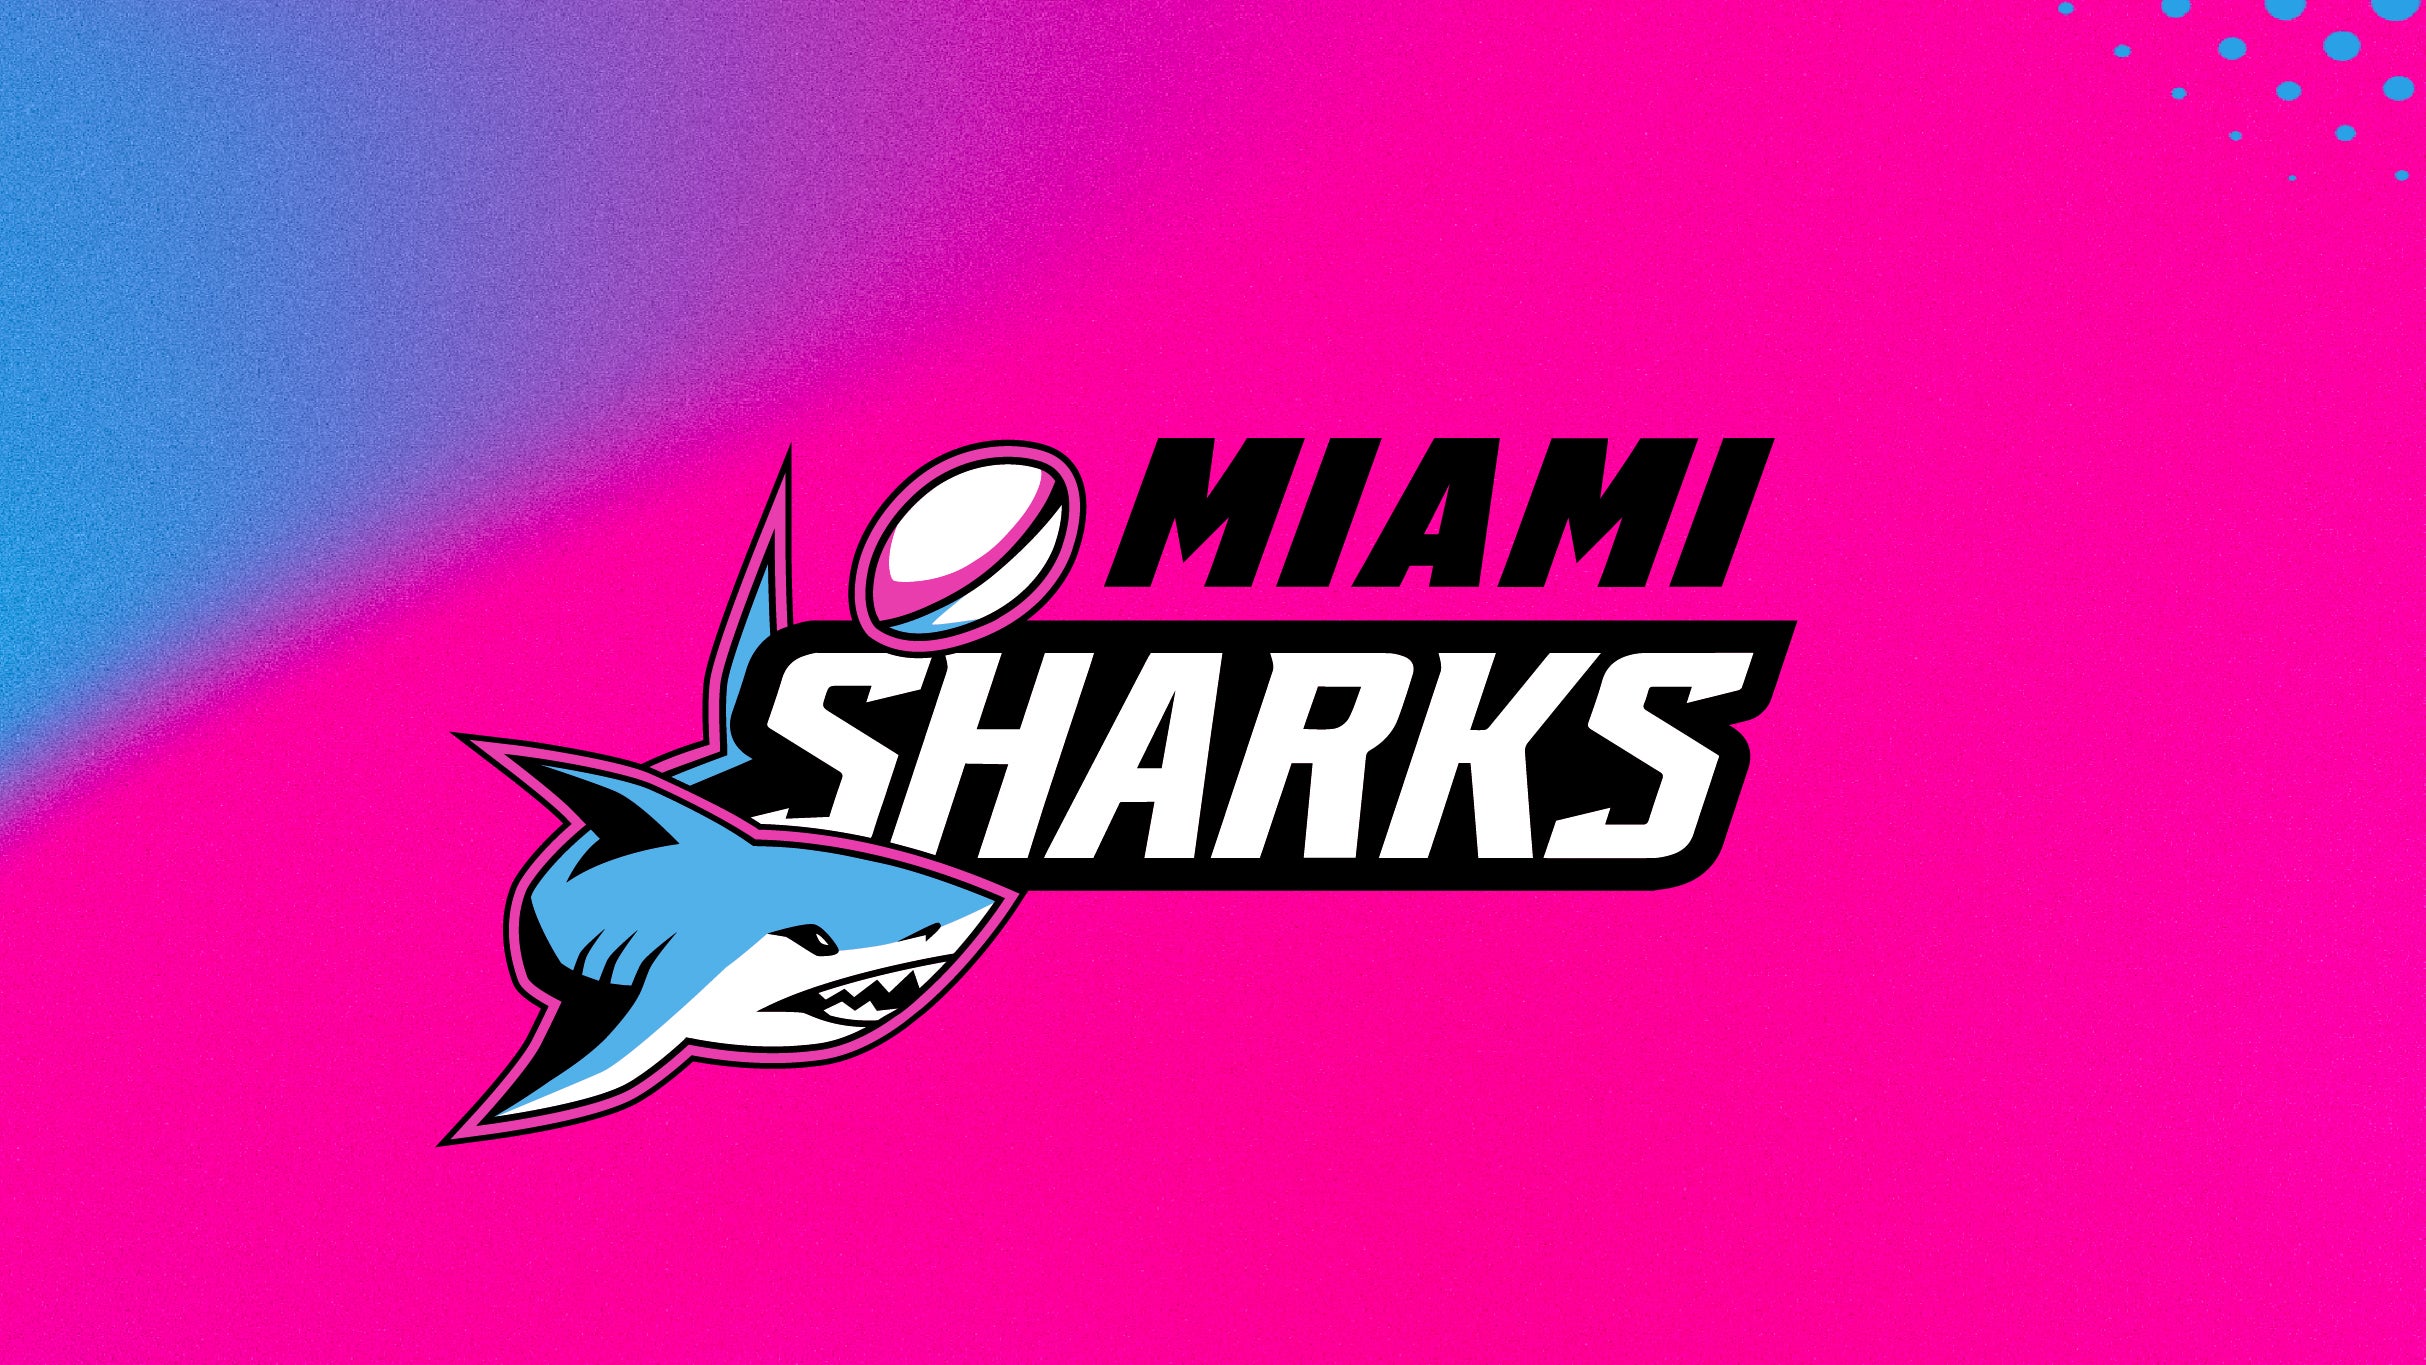 Miami Sharks vs NOLA Gold presales in Fort Lauderdale